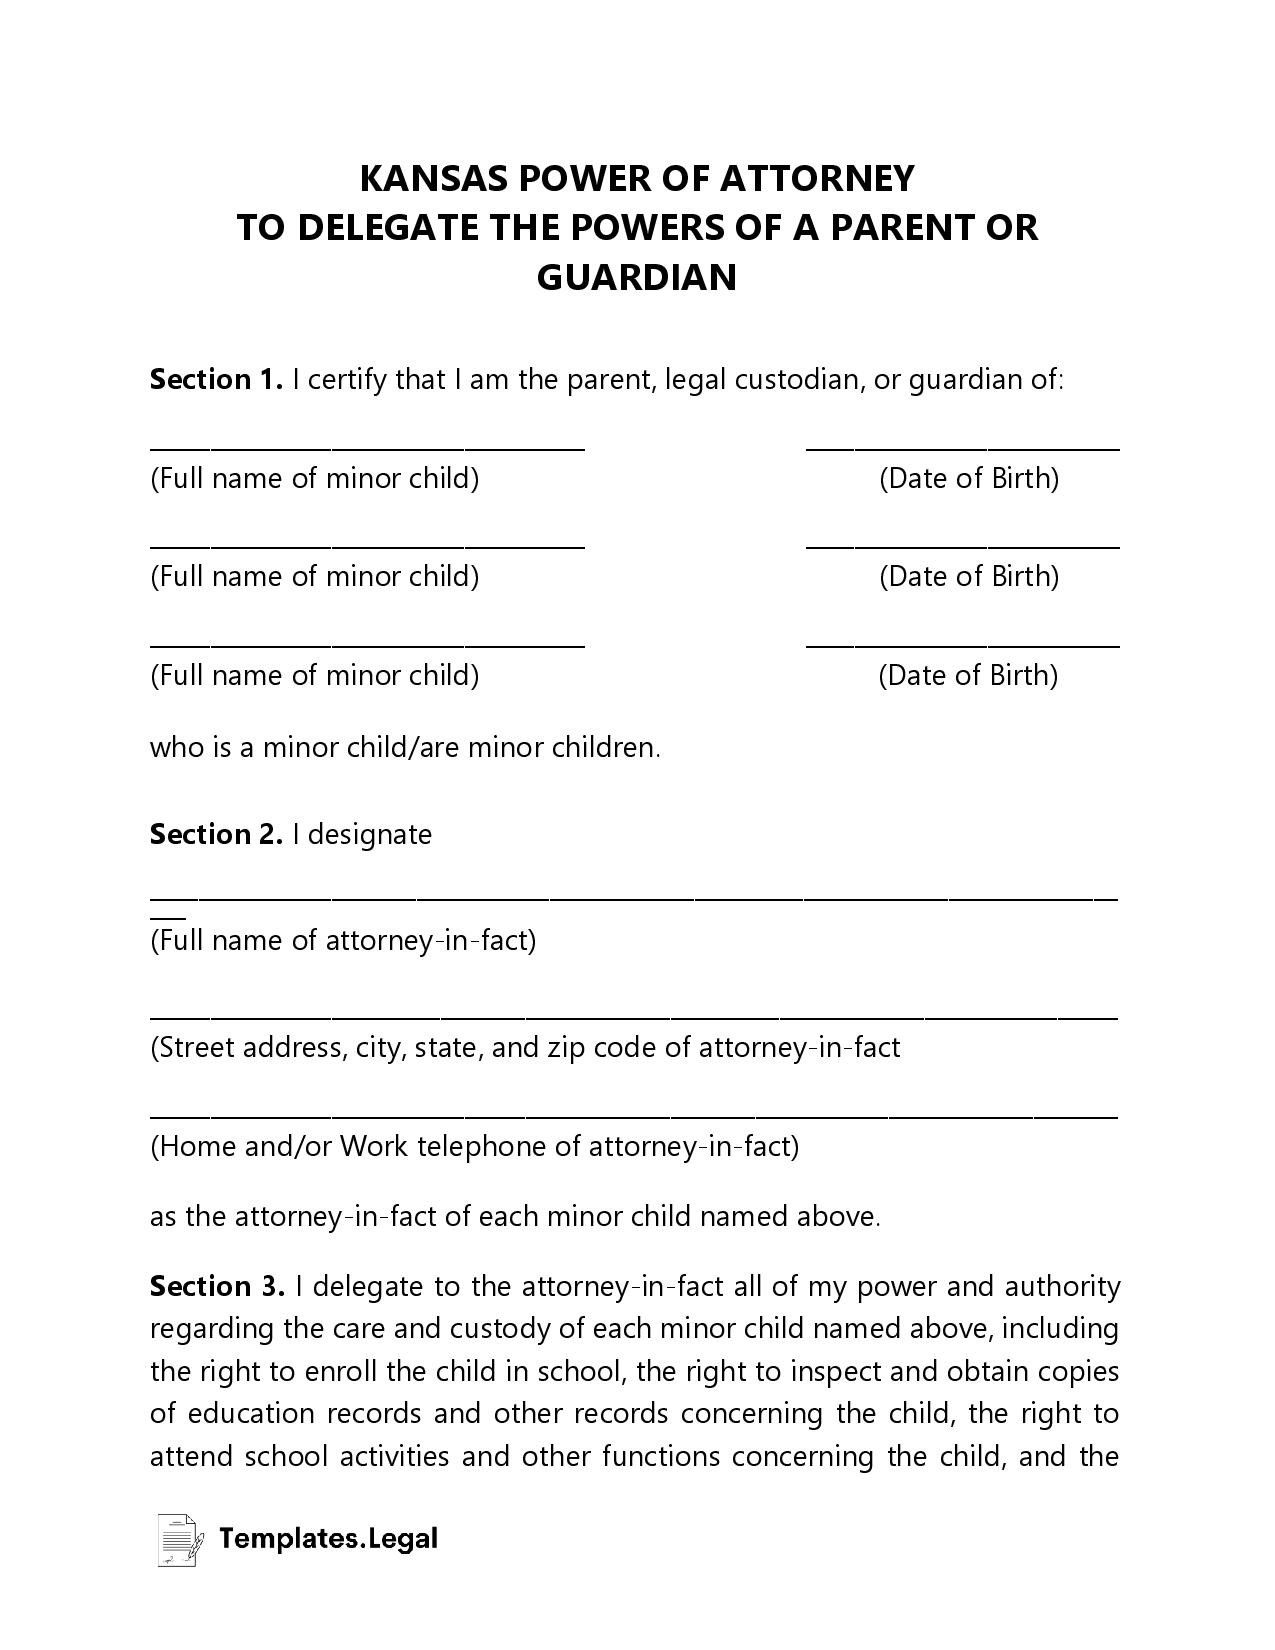 Kansas Minor (Child) Power of Attorney - Templates.Legal